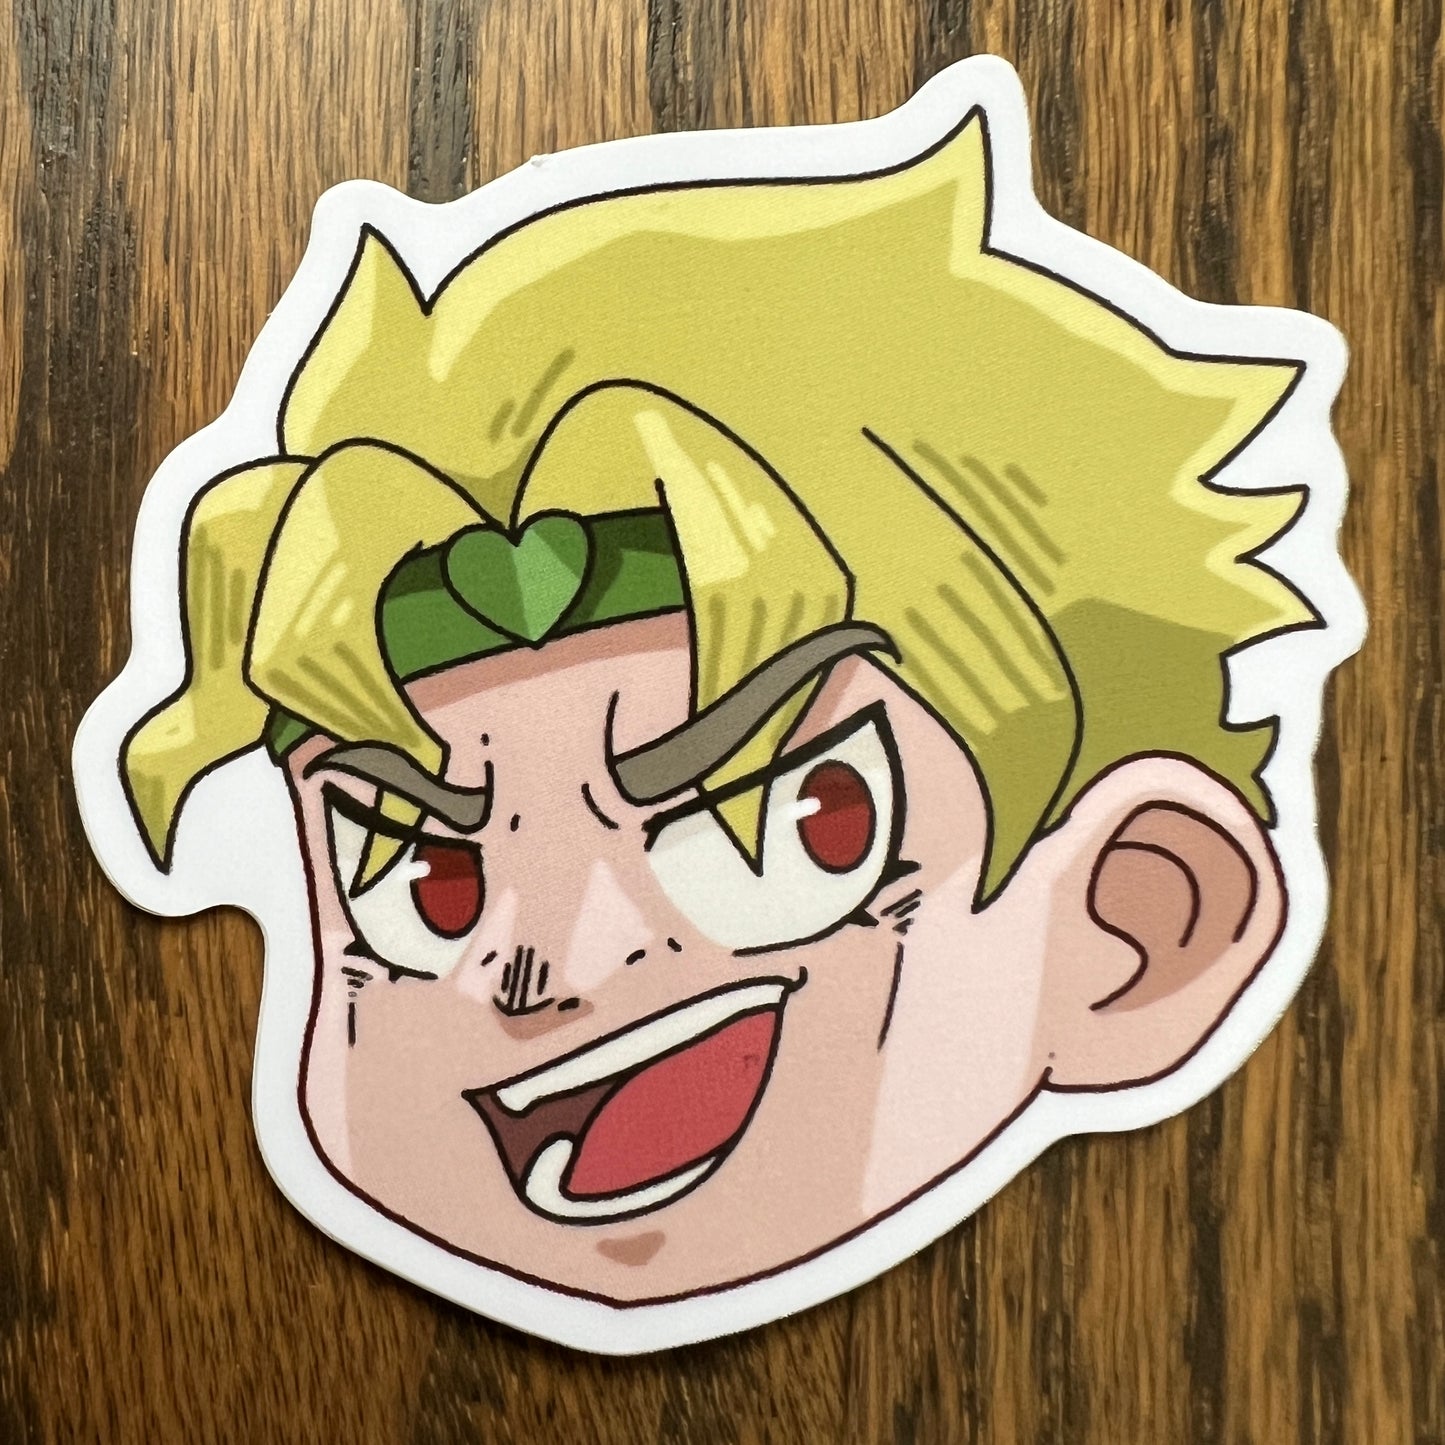 JJBA Anime Chibi Stickers - Die Cut - Jotaro, Dio